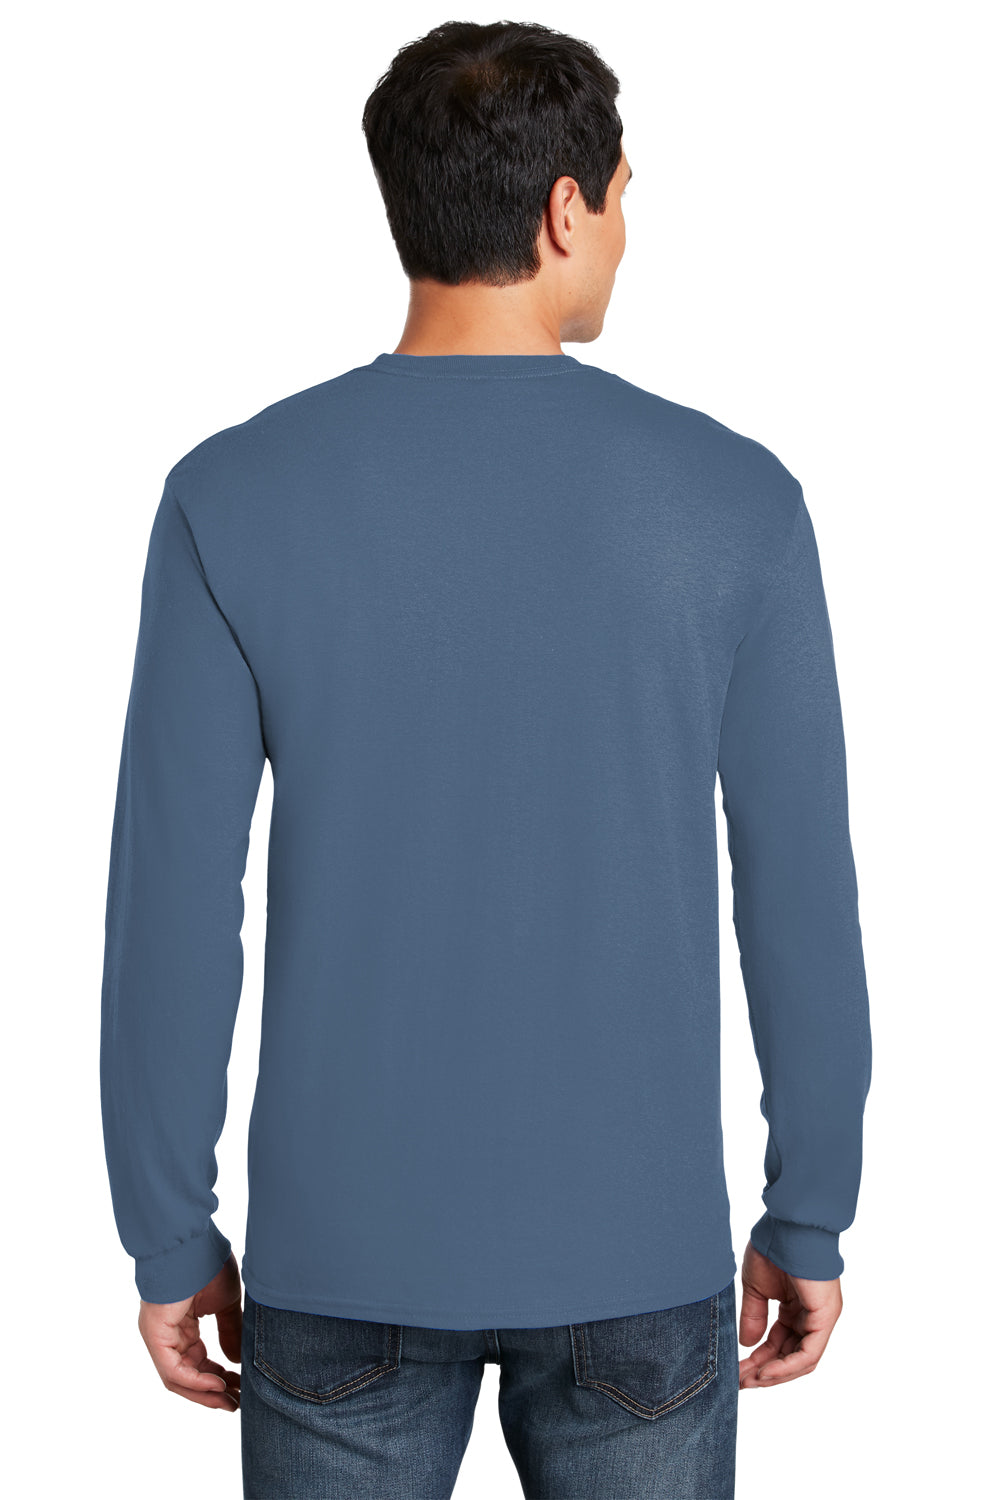 Gildan Mens Long Sleeve Crewneck T-Shirt Indigo Blue Back